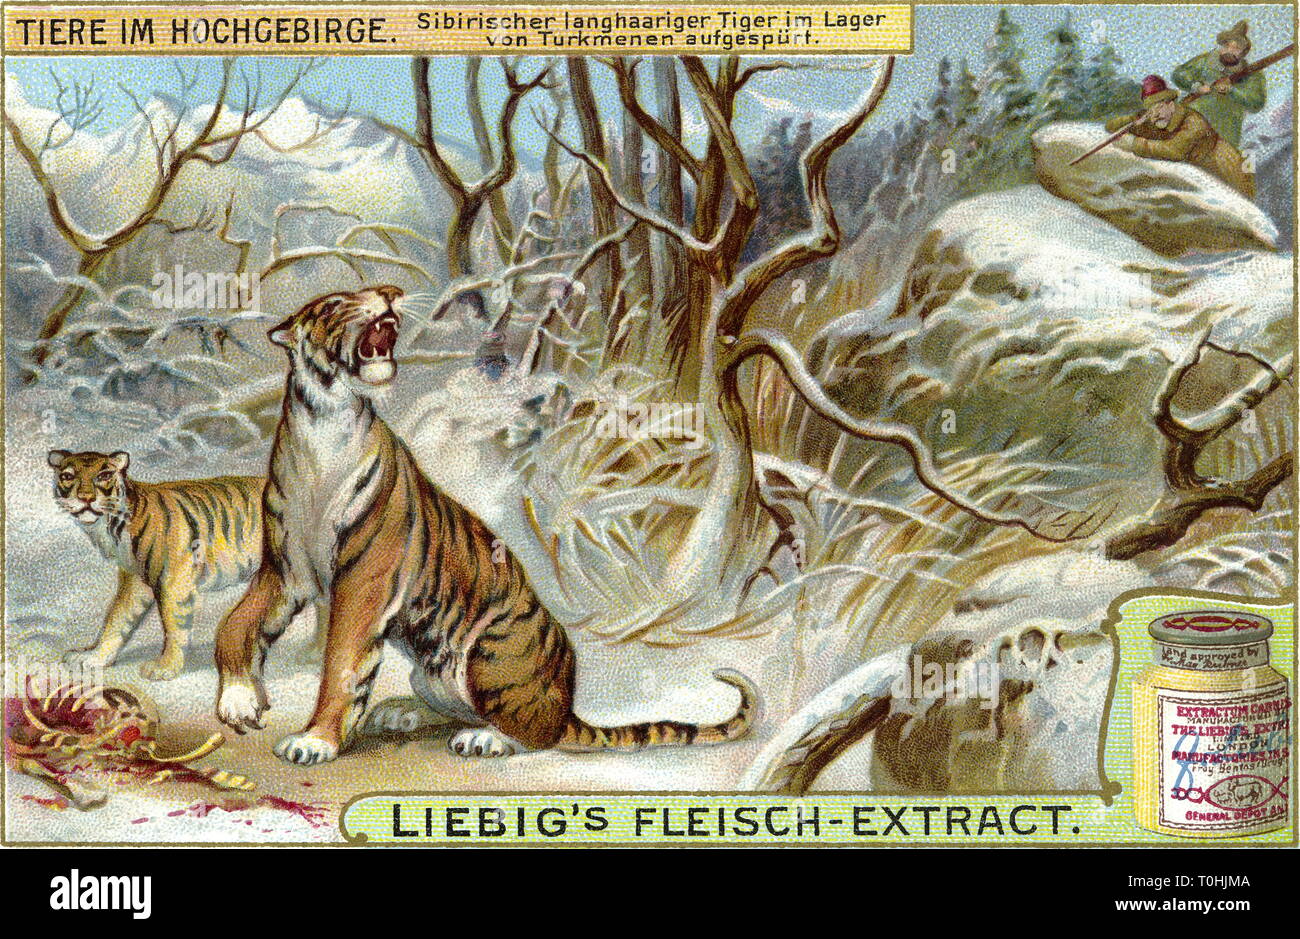 Hunt, Turkmens sul tiger hunt, tigre siberiana (panthera tigris altaica), in Turkmenistan, Russia, trading card della società Liebig, Germania, circa 1900, Additional-Rights-Clearance-Info-Not-Available Foto Stock